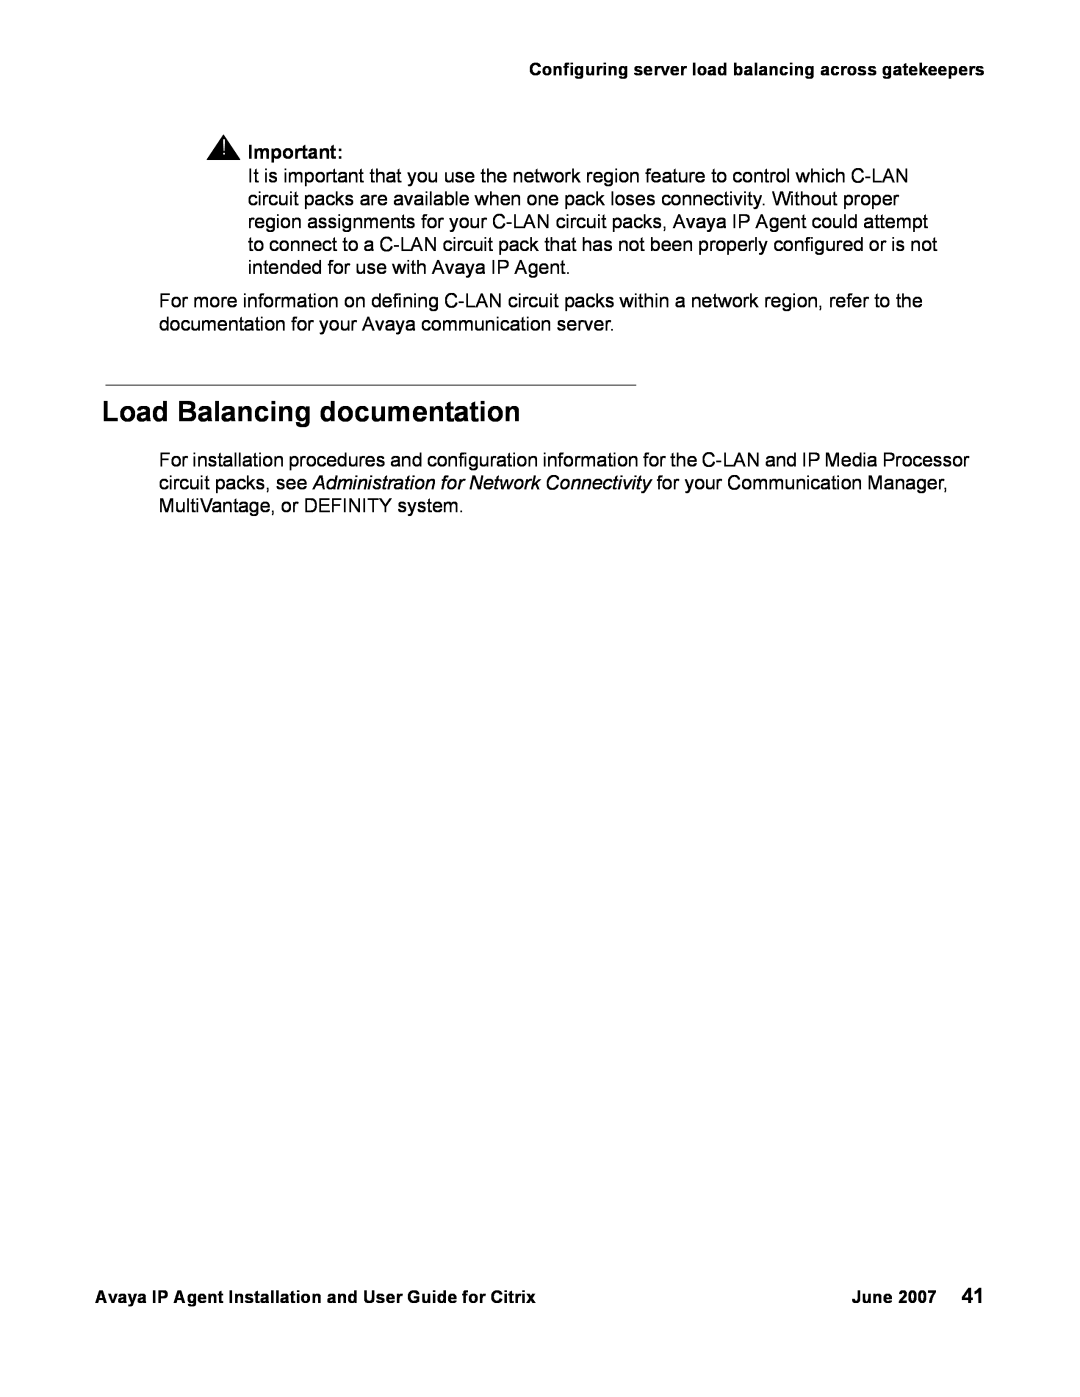 Avaya manual Load Balancing documentation, Configuring server load balancing across gatekeepers, June 2007 